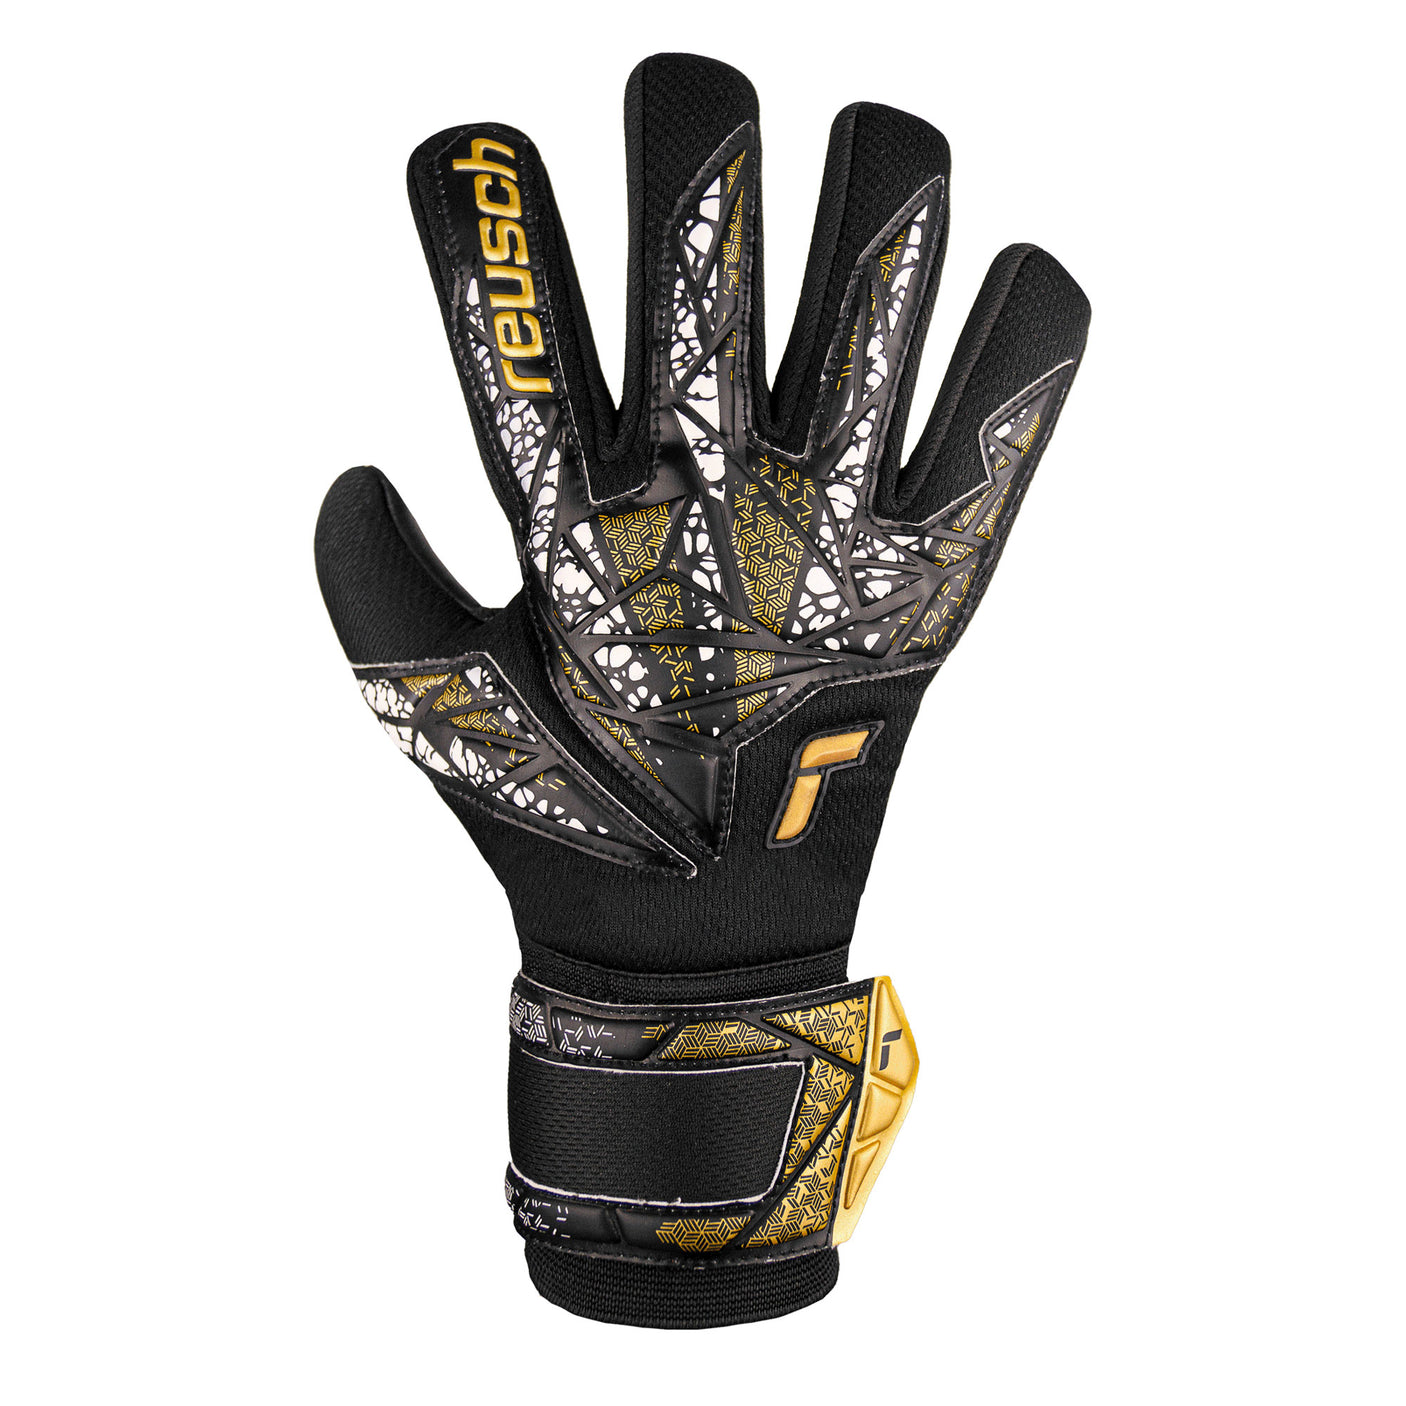 Reusch Kids Attrakt Silver NC Fingersave Goalkeeper Gloves Black/Gold/White Front